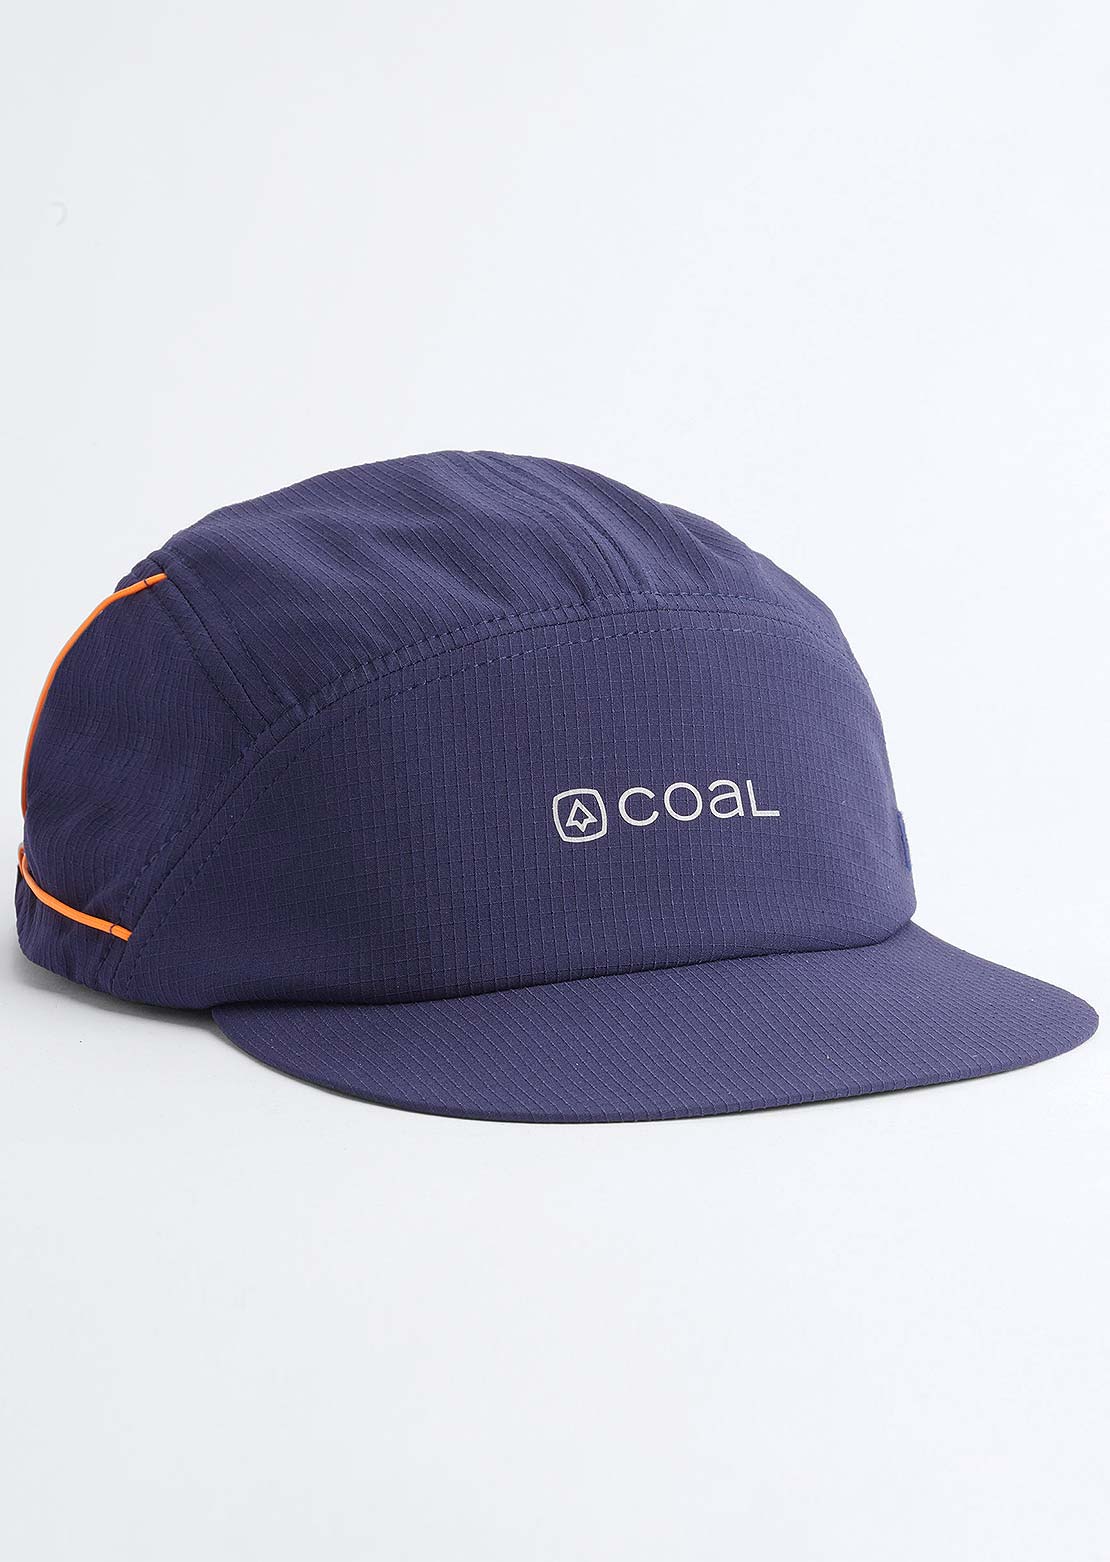 Coal Framework Cap Navy